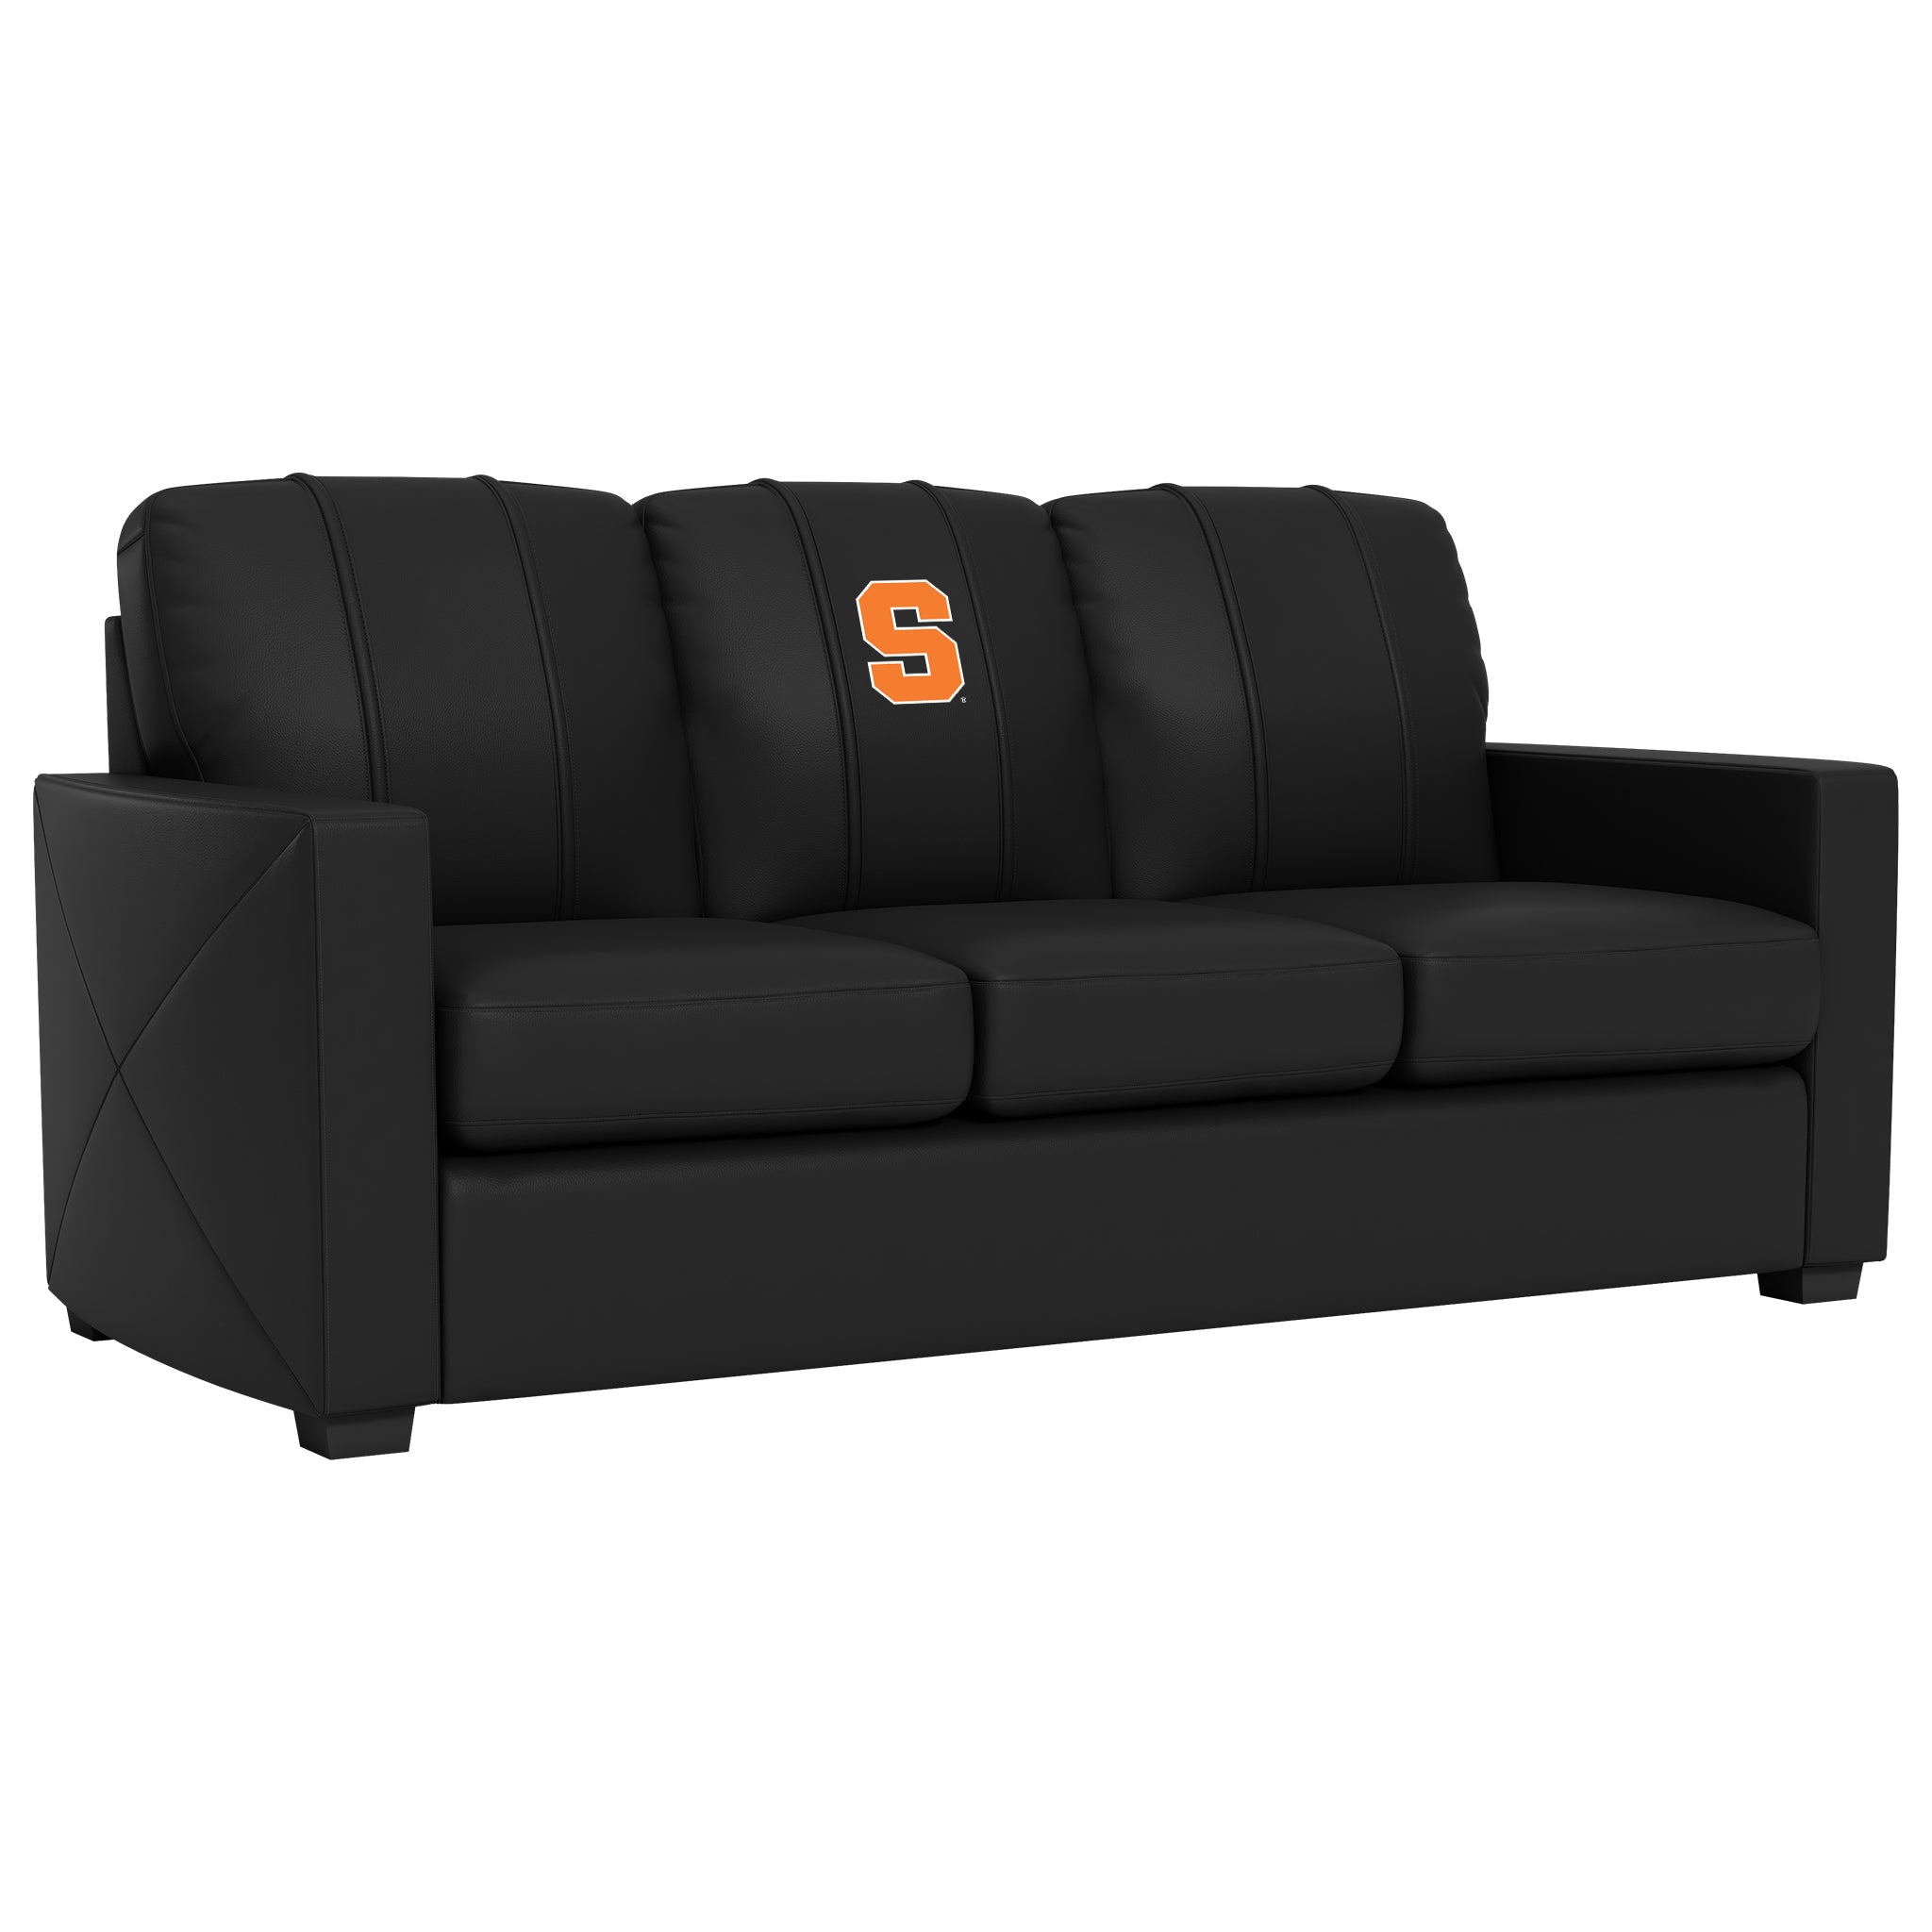 Syracuse Orange Silver Sofa with Syracuse Orange Logo